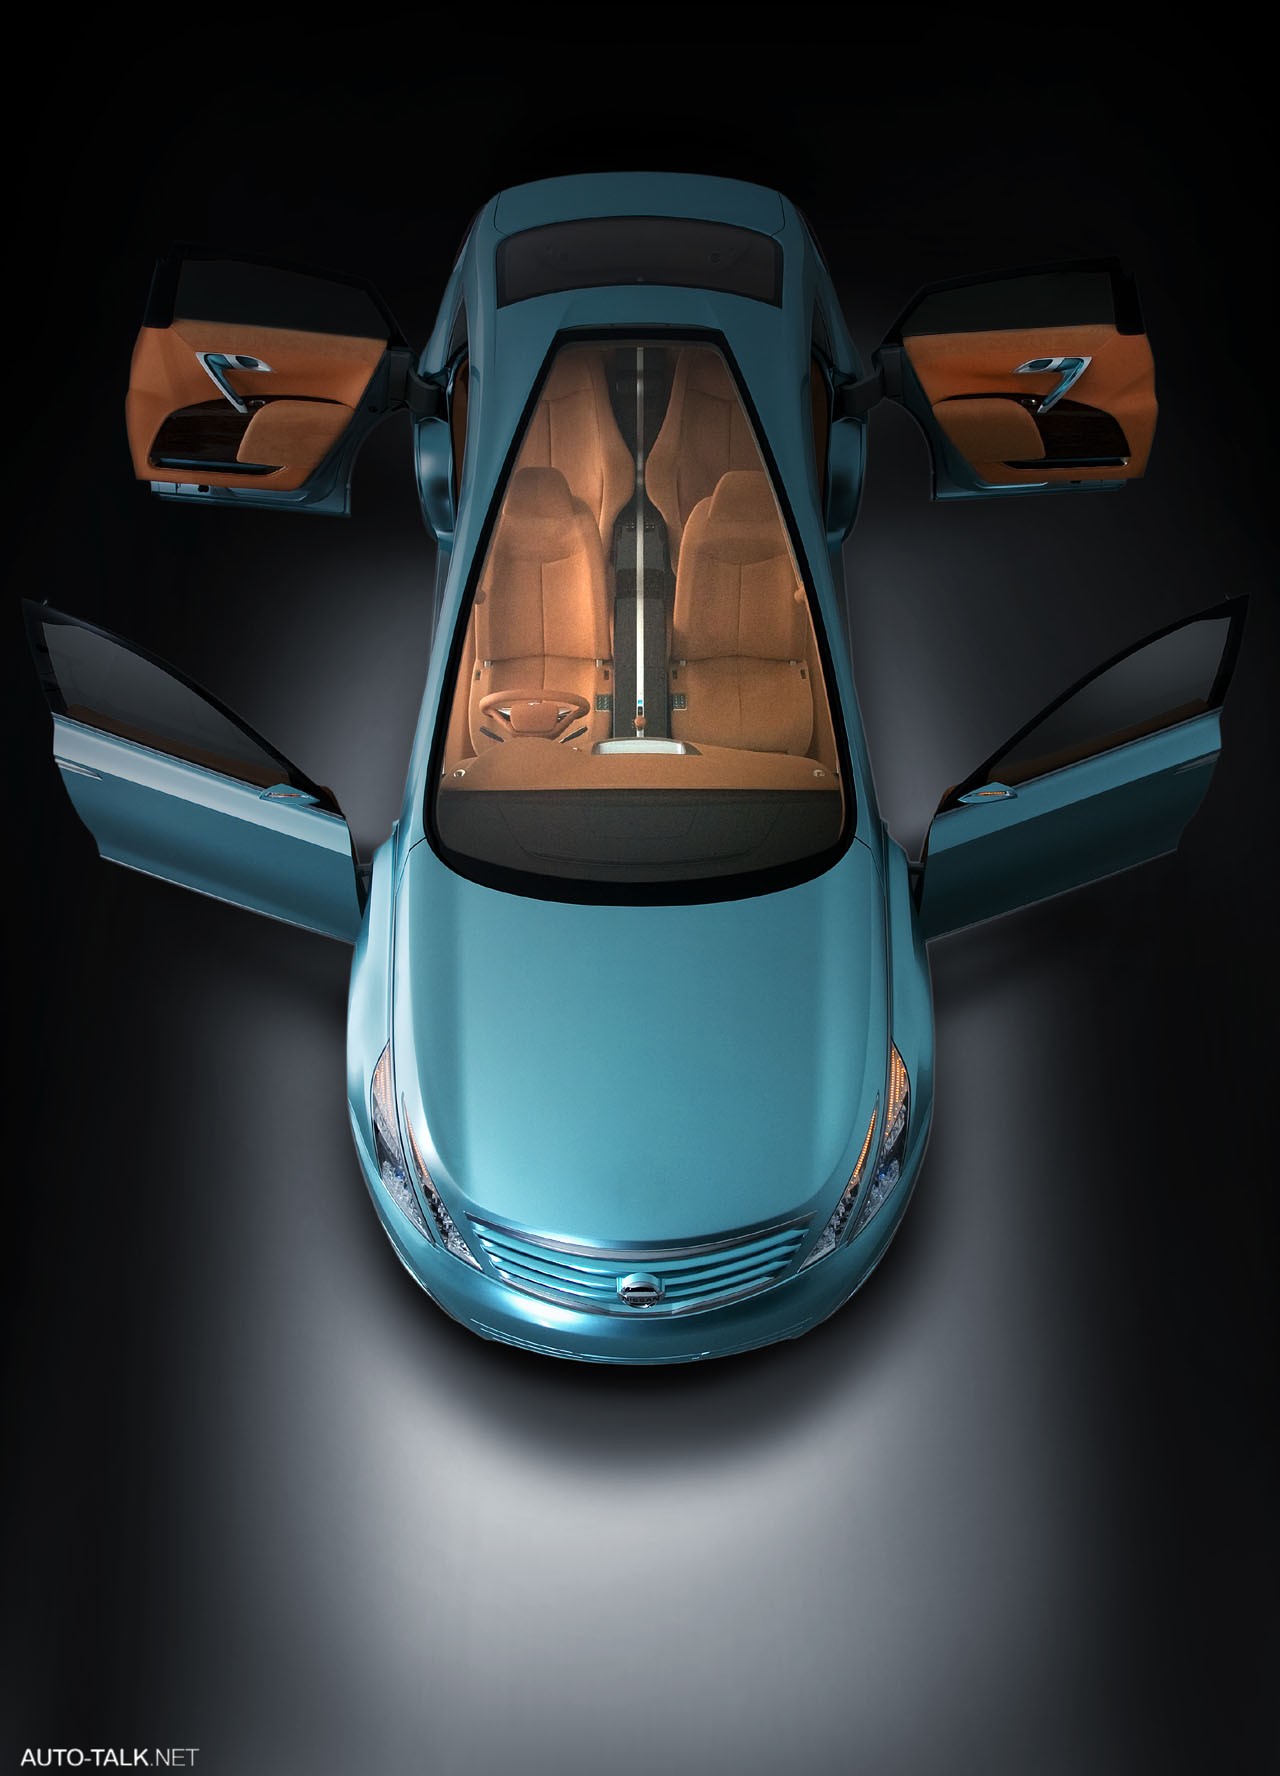 Nissan Intima Concept